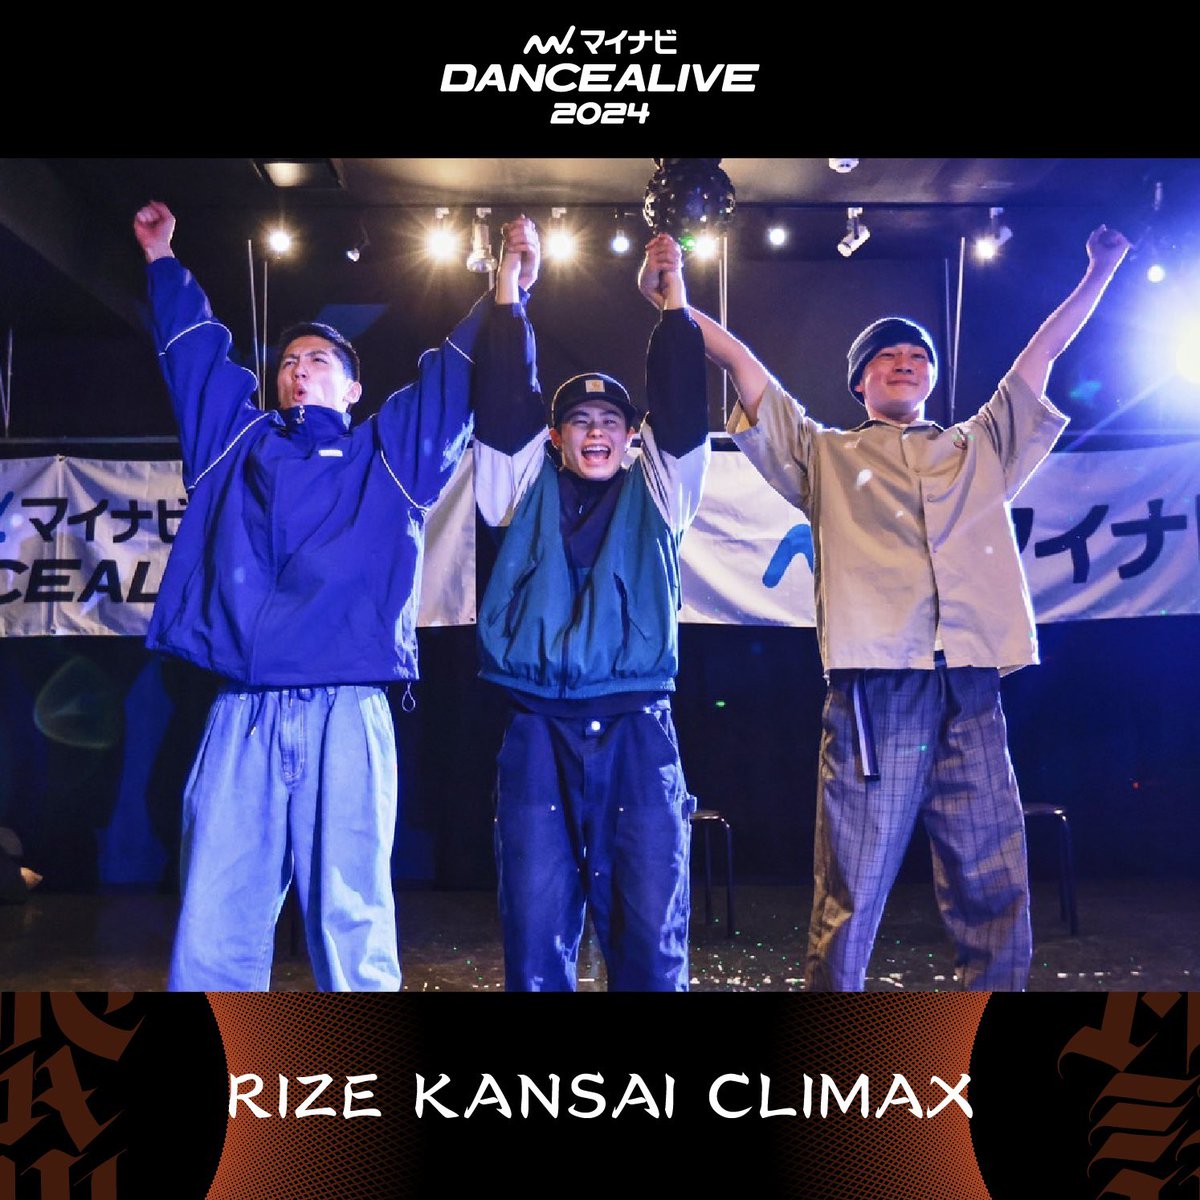 🌐🌐 RIZE KANSAI CLIMAX WINNER ⁡ 〜WINNER〜 EPOK ⁡ #マイナビダンスアライブ #dancealive #AlwaysYouth